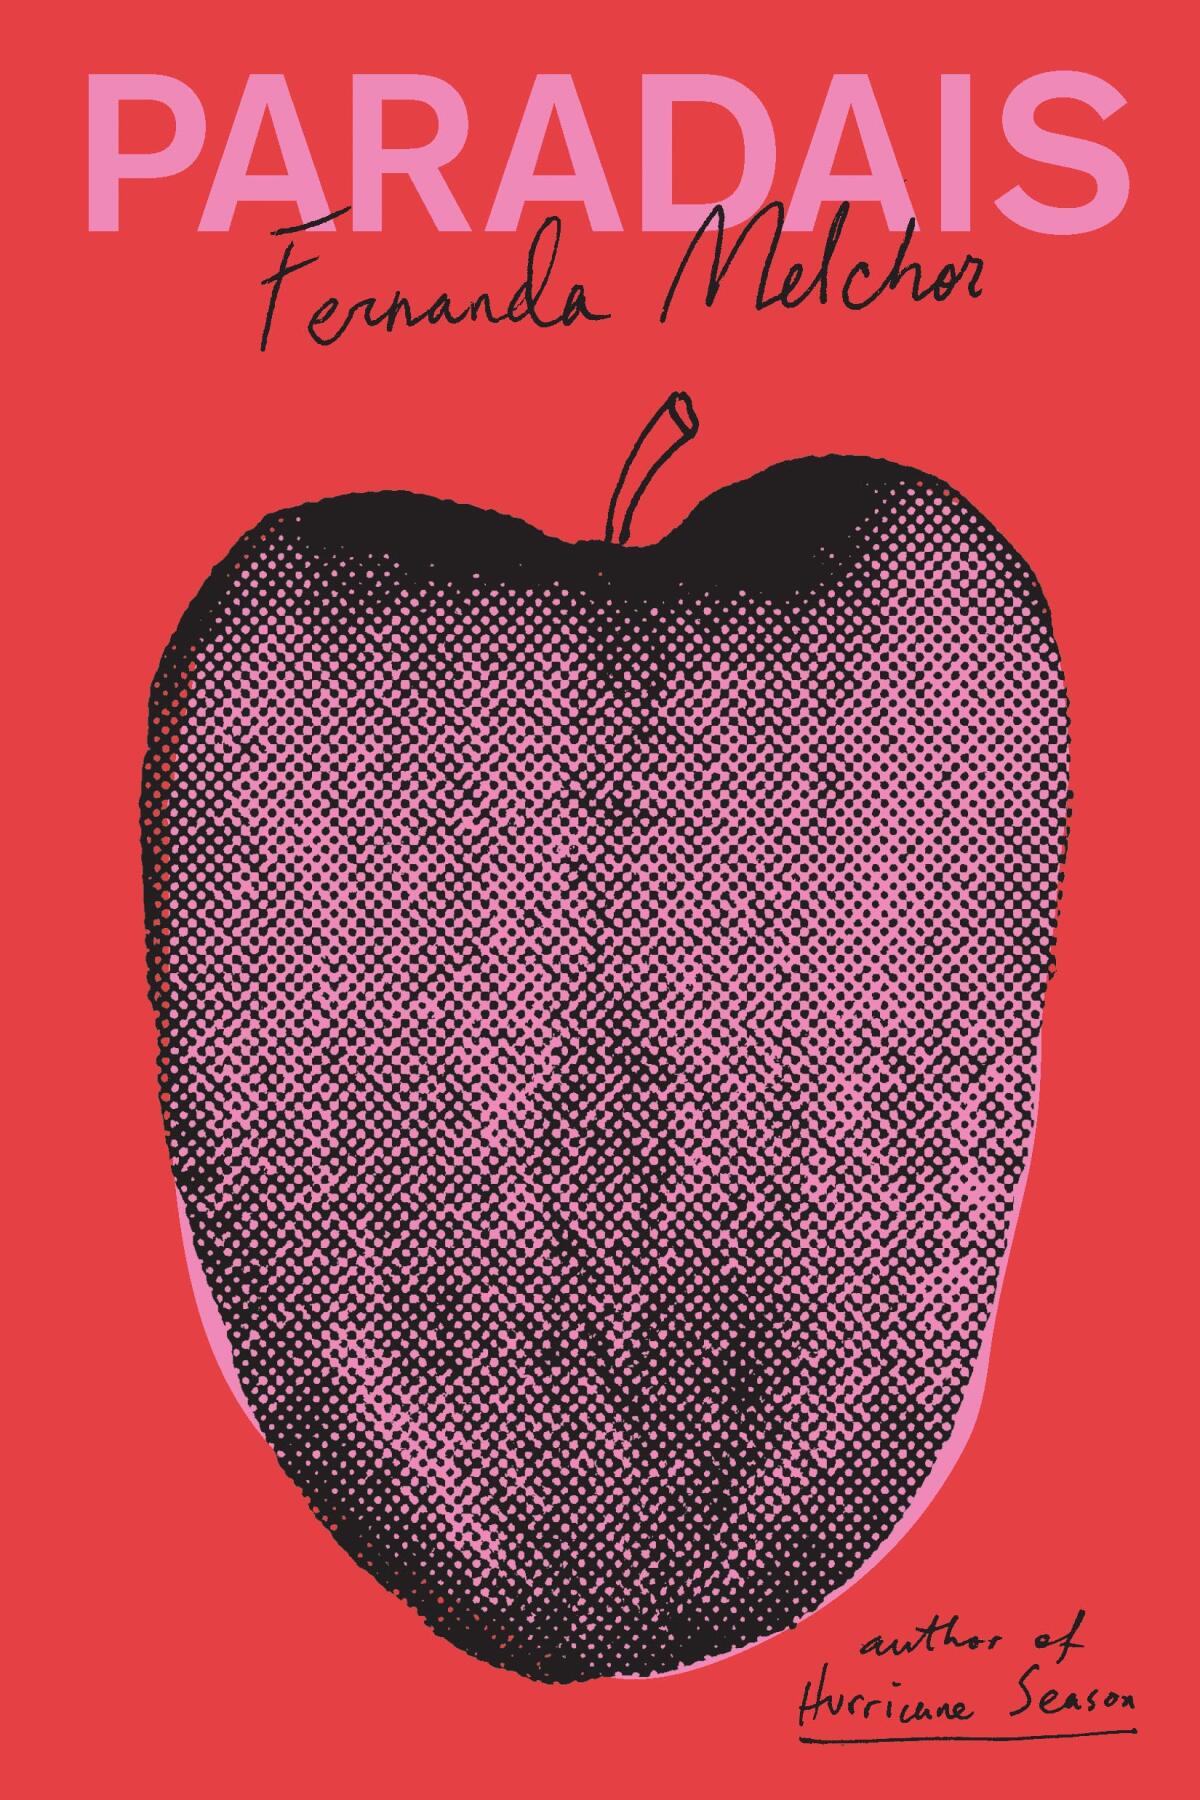 "Paradais," by Fernanda Melchor